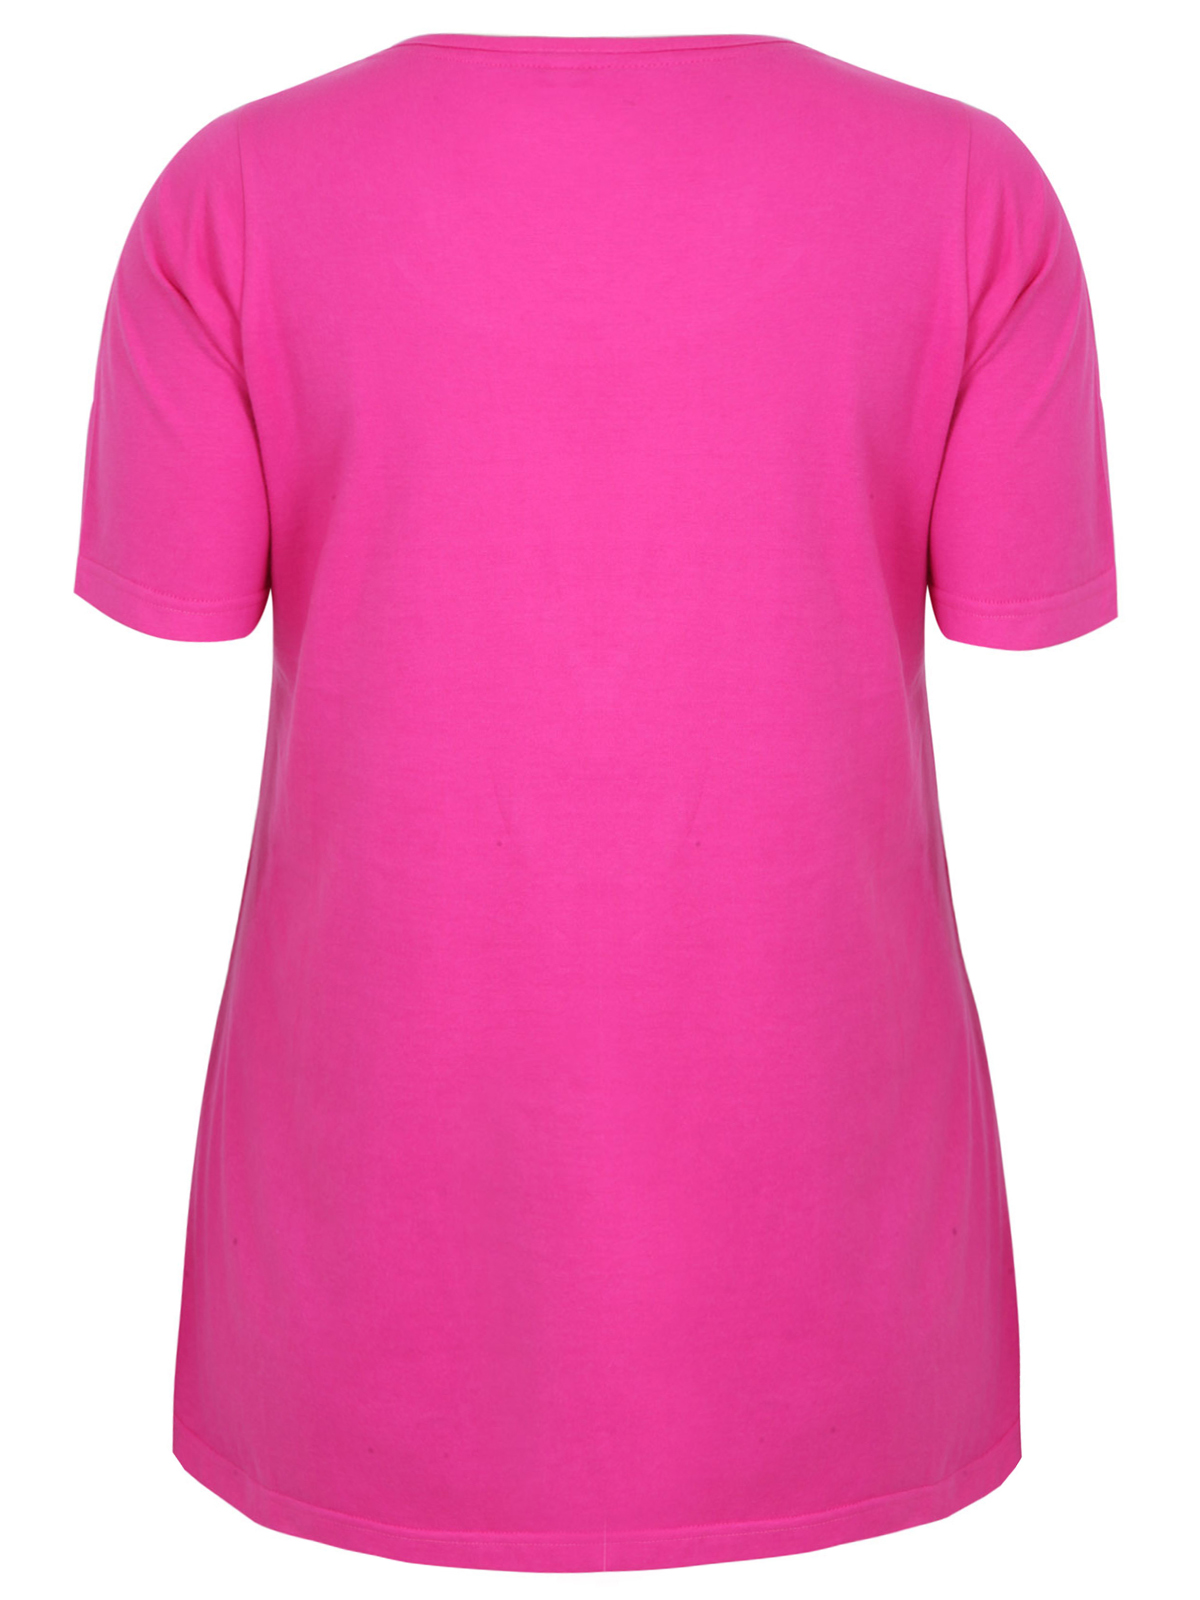 CURVE - - HOT-PINK Short Sleeve Pure Cotton Scoop Neck T-Shirt - Plus ...